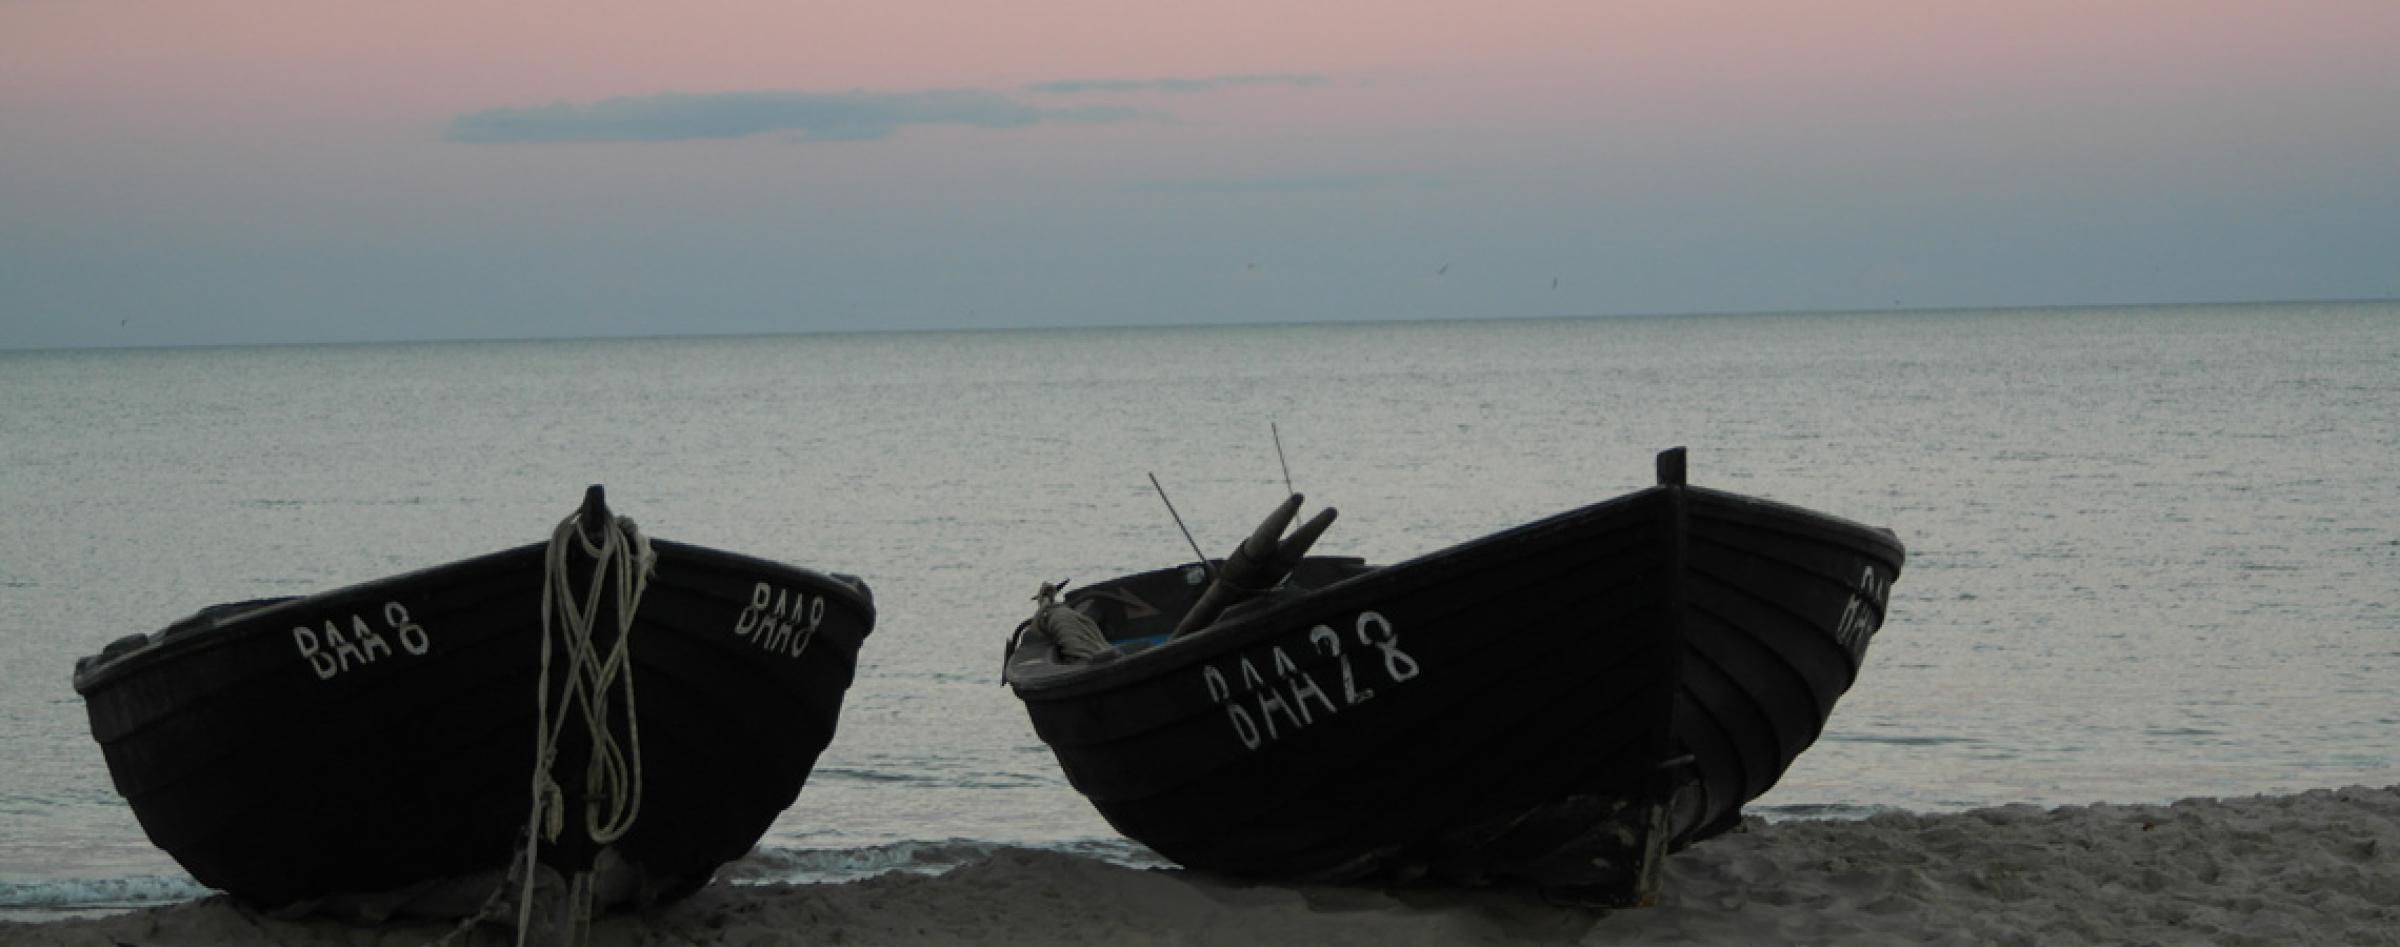 Boote am Strand zum Sonnenuntergang